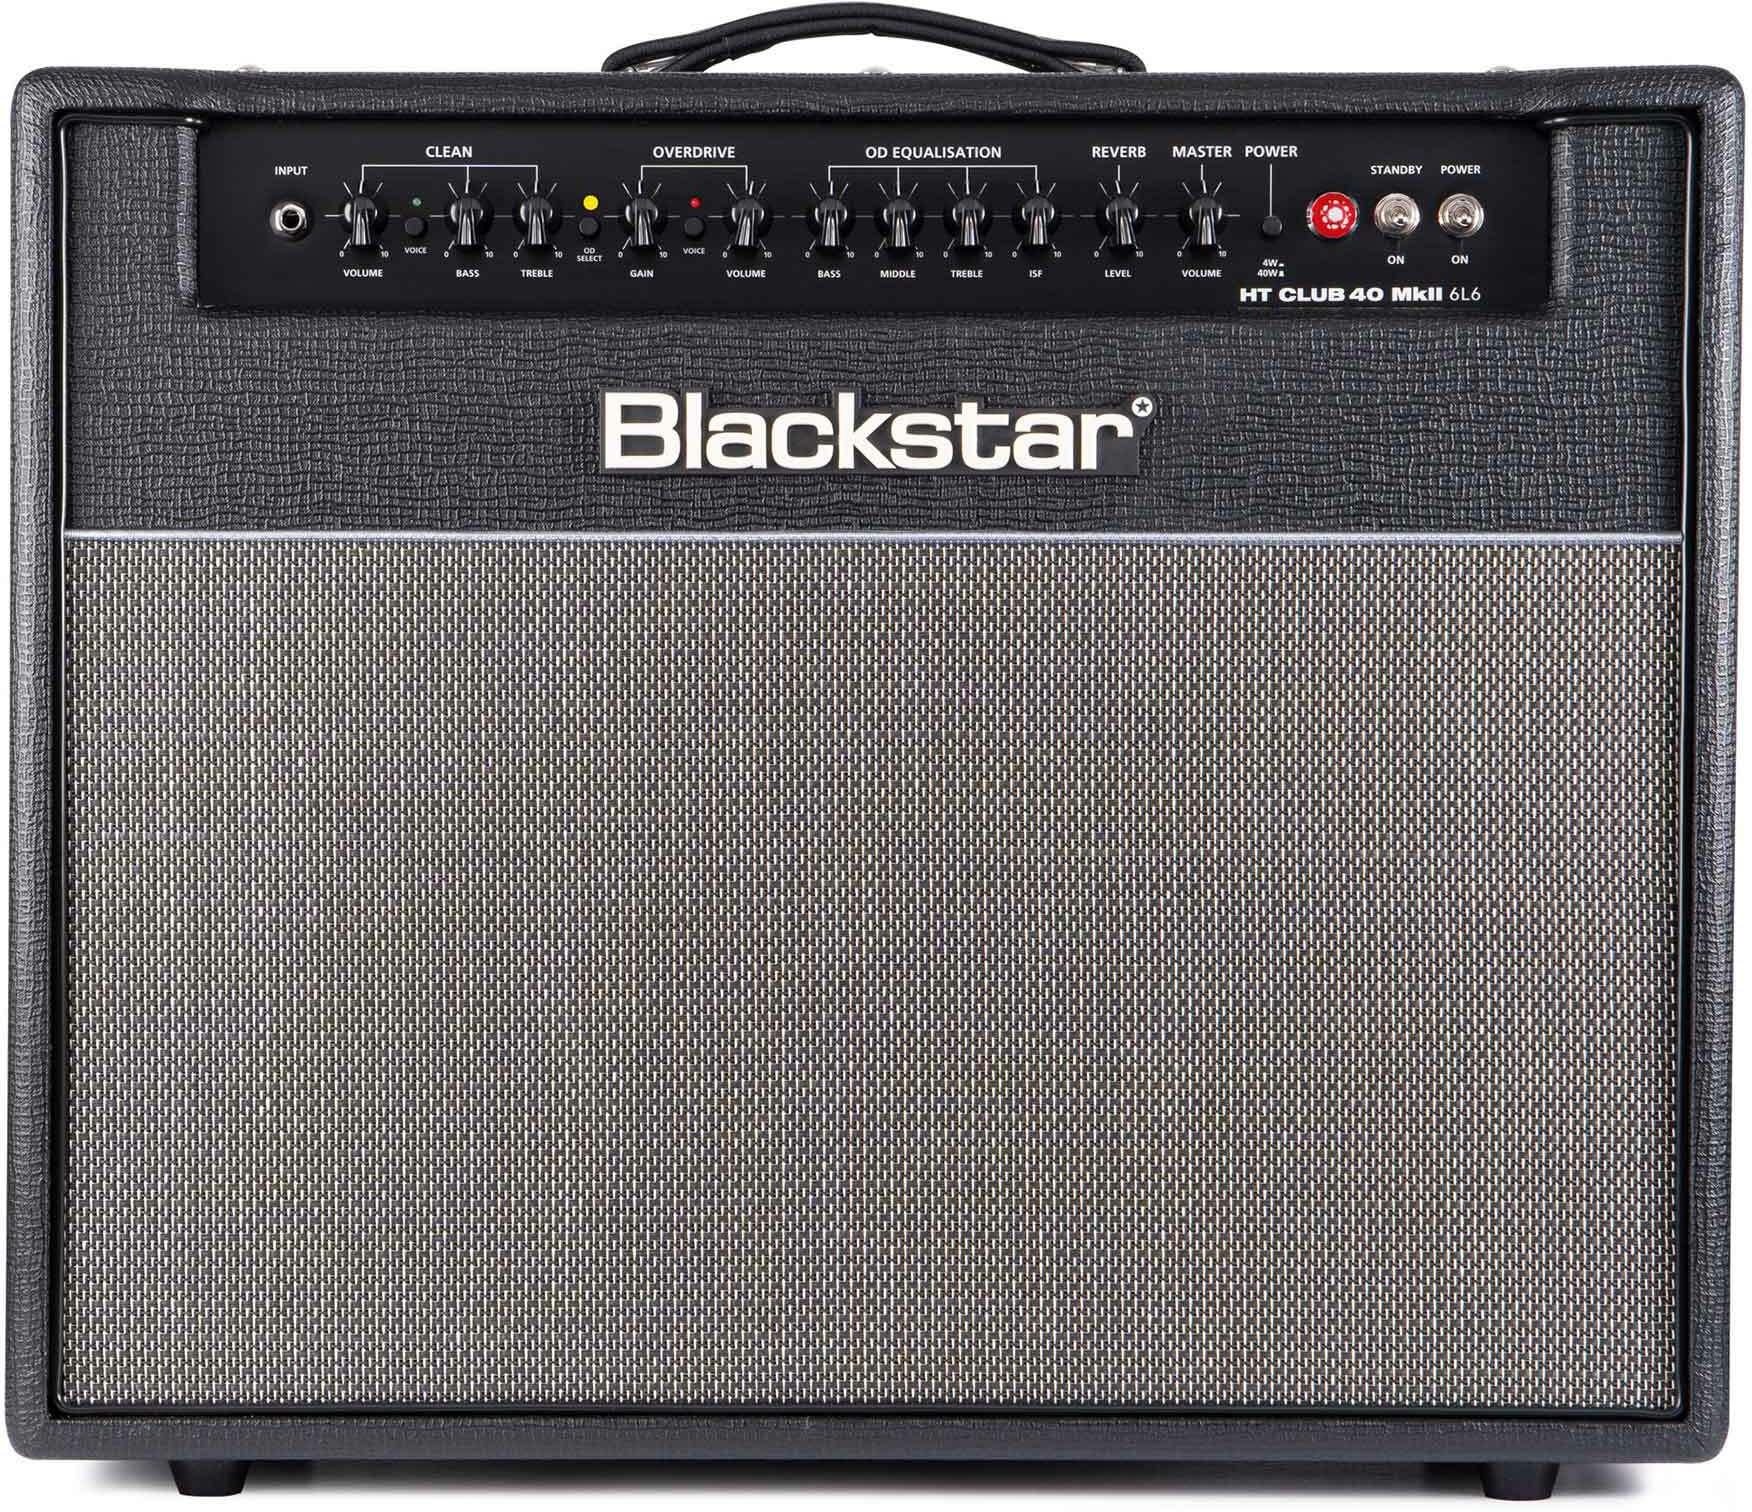 Blackstar Ht Club 40 Mkii 6l6 40w 1x12 Black - Ampli Guitare Électrique Combo - Main picture